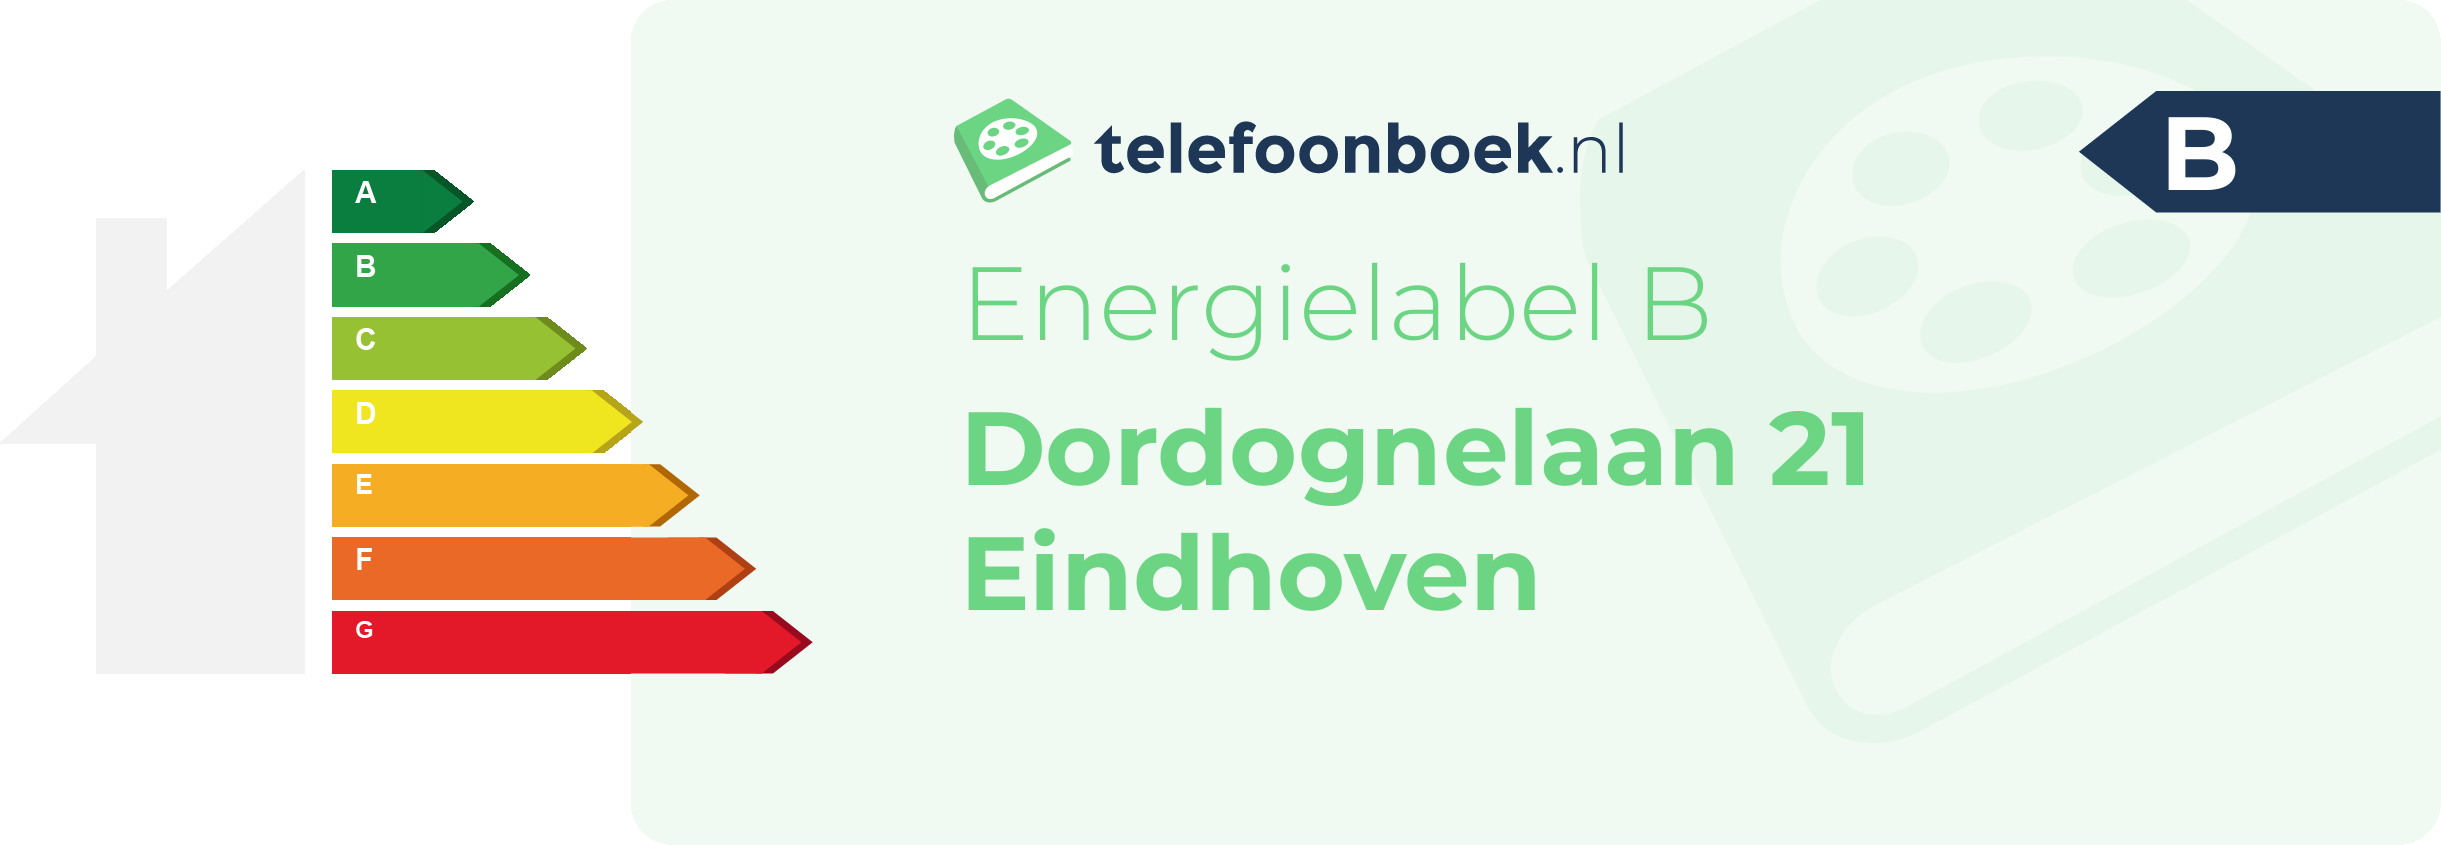 Energielabel Dordognelaan 21 Eindhoven